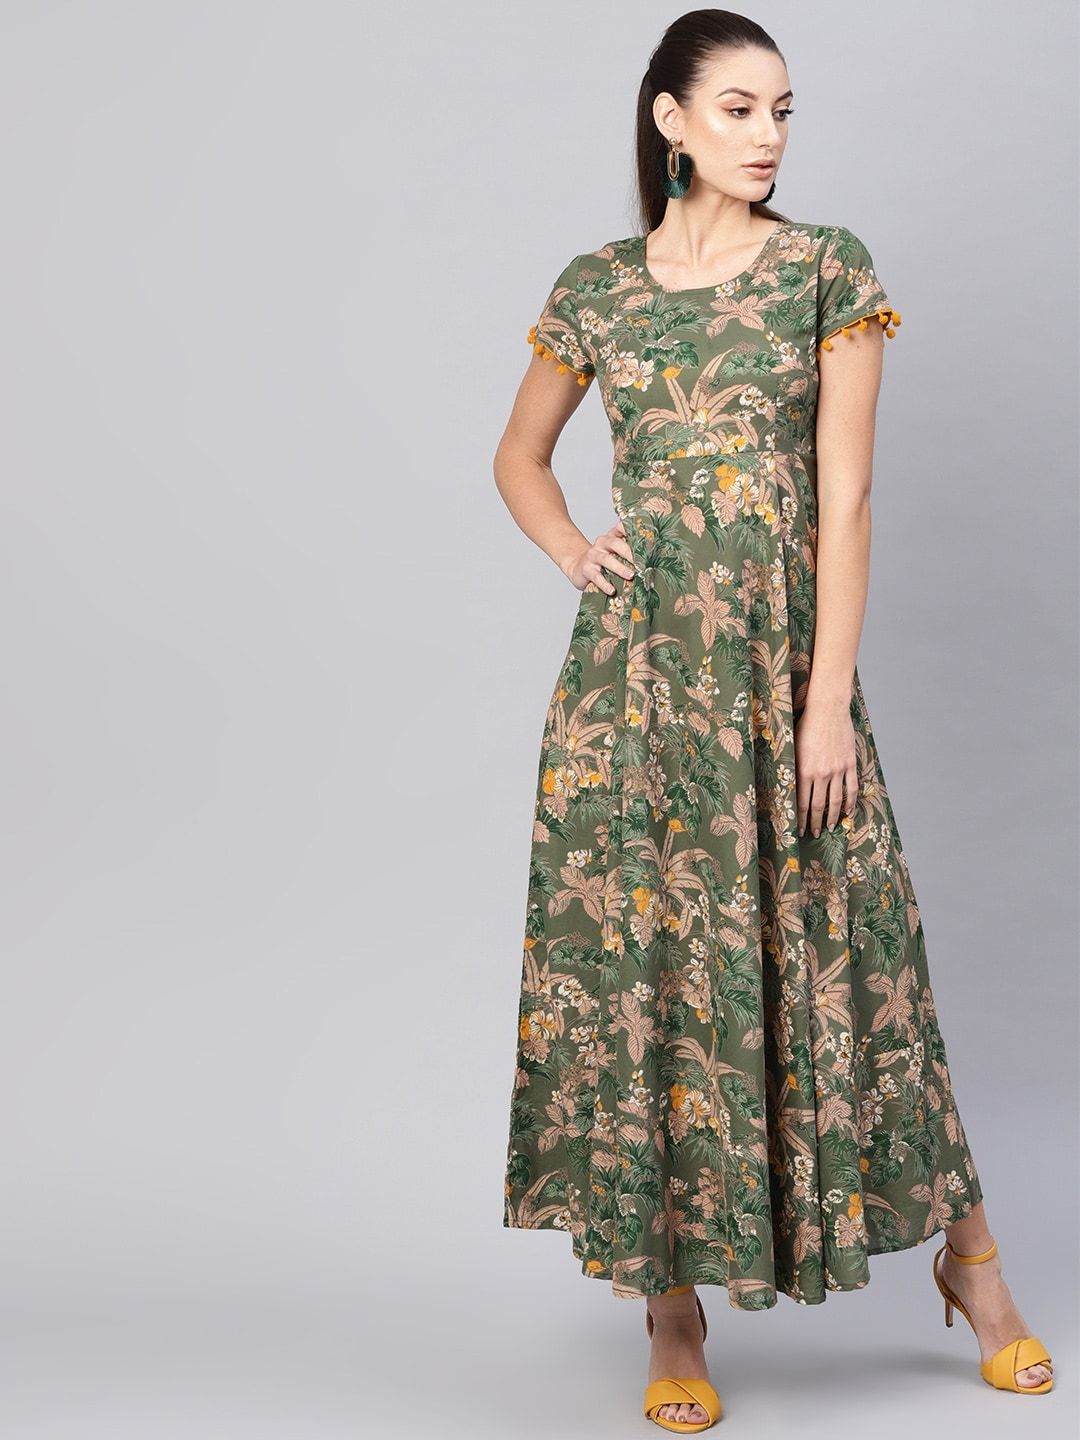 Women's  Olive Green & Beige Floral Printed Maxi Dress - AKS